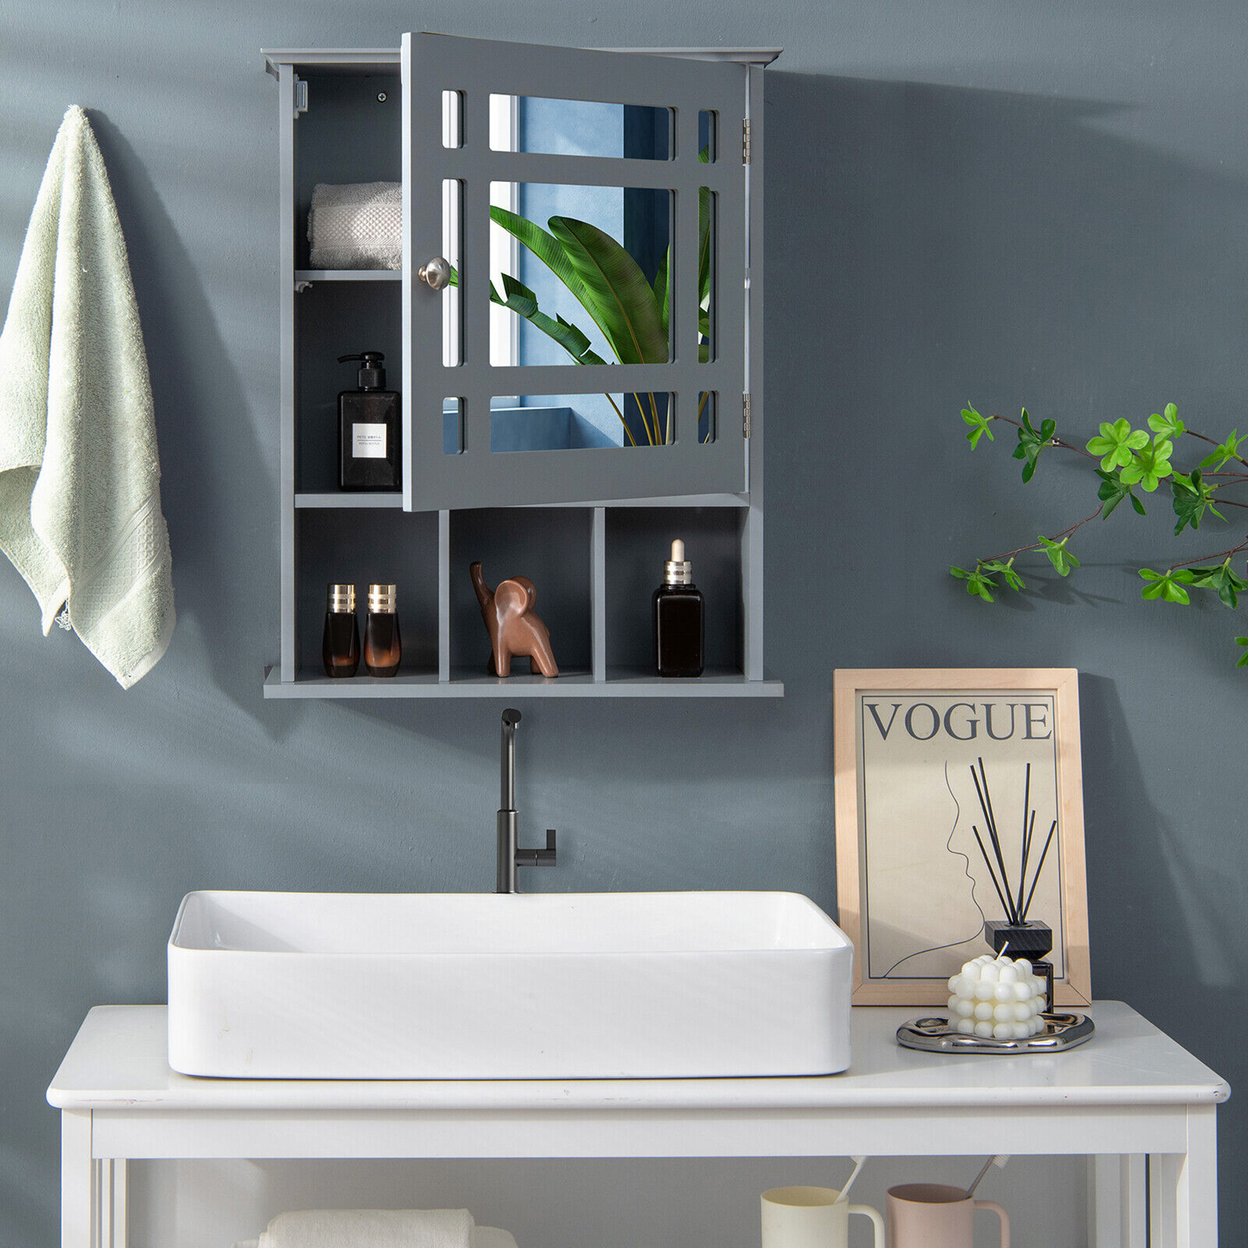 Mirrored Medicine Cabinet Bathroom Wall Mounted Storage W/Adjustable Shelf - Brown